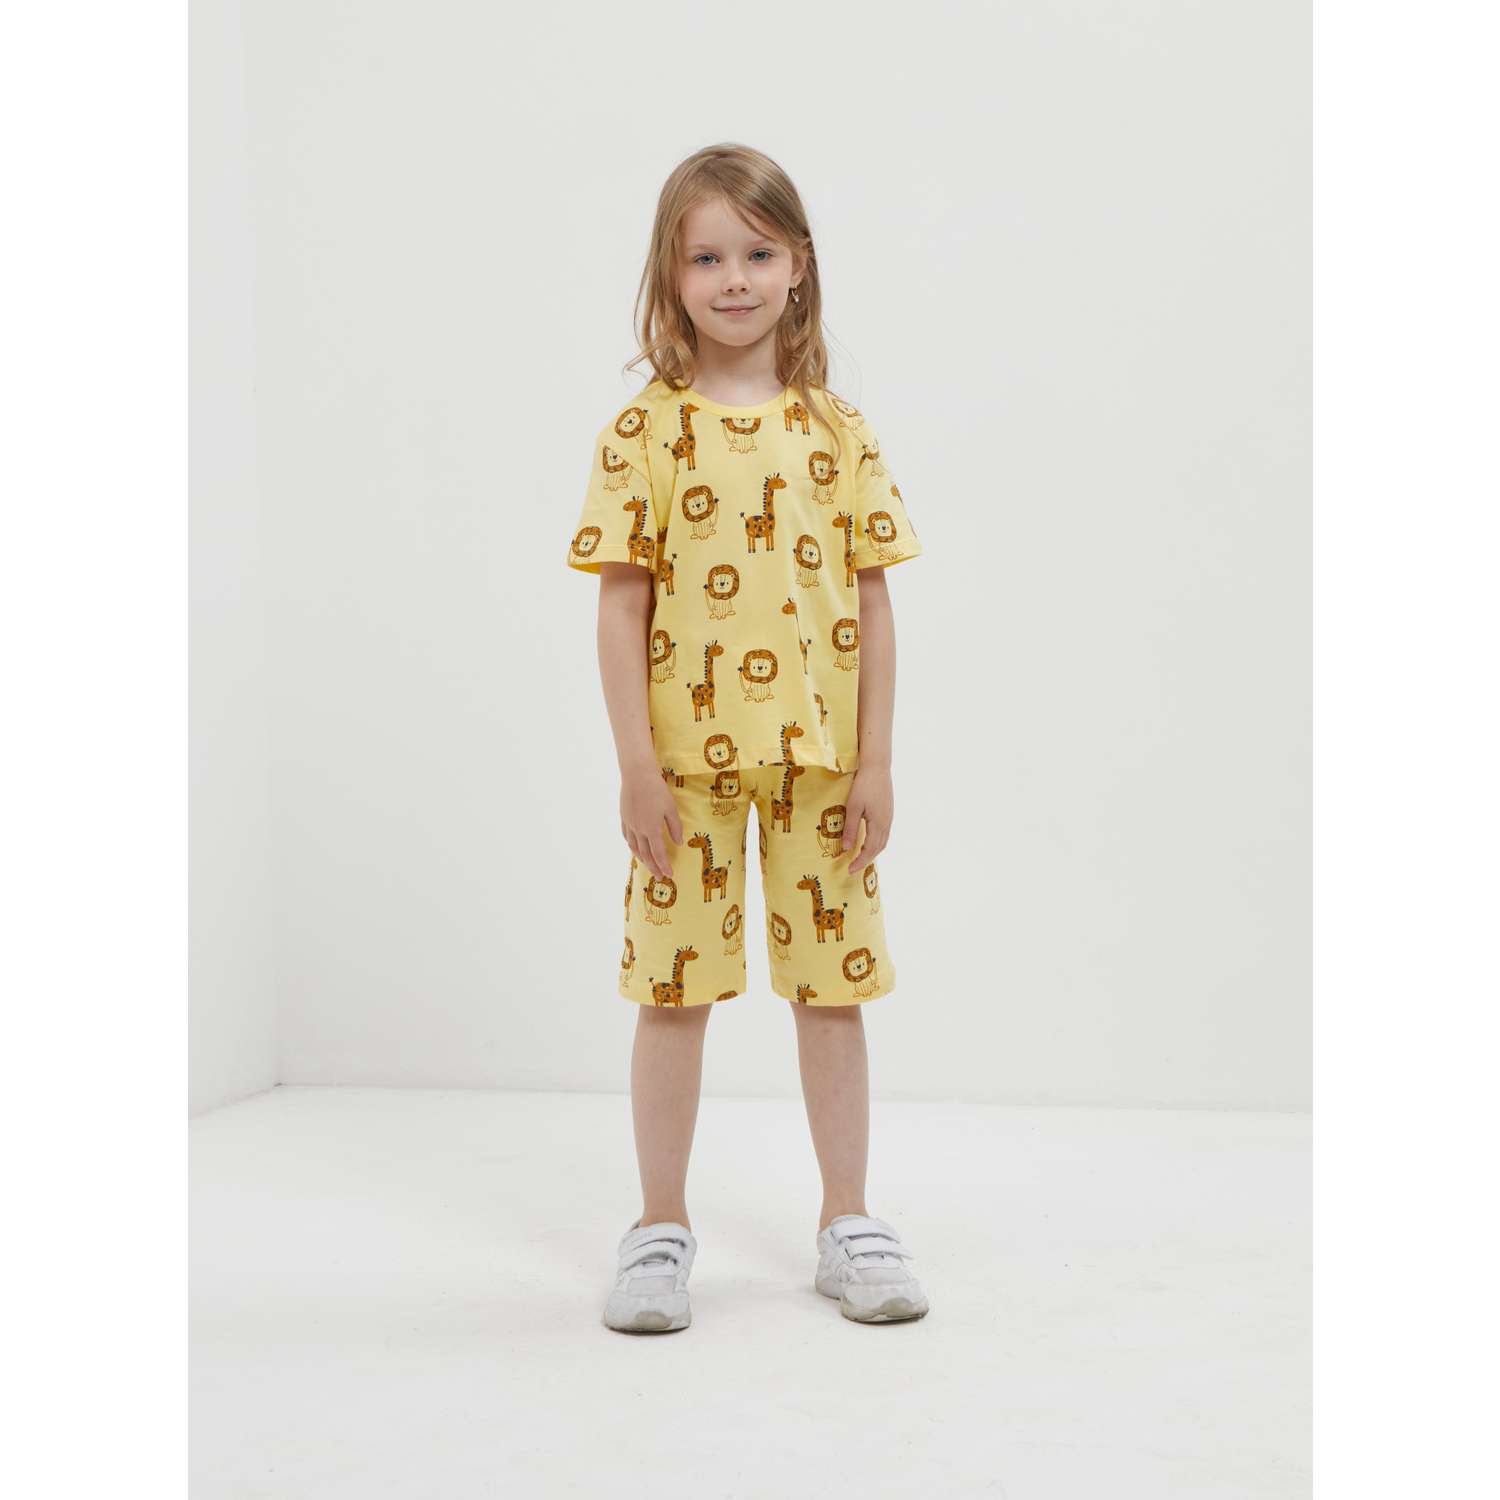 Пижама ISSHOP пижама желтая с шортами - фото 1